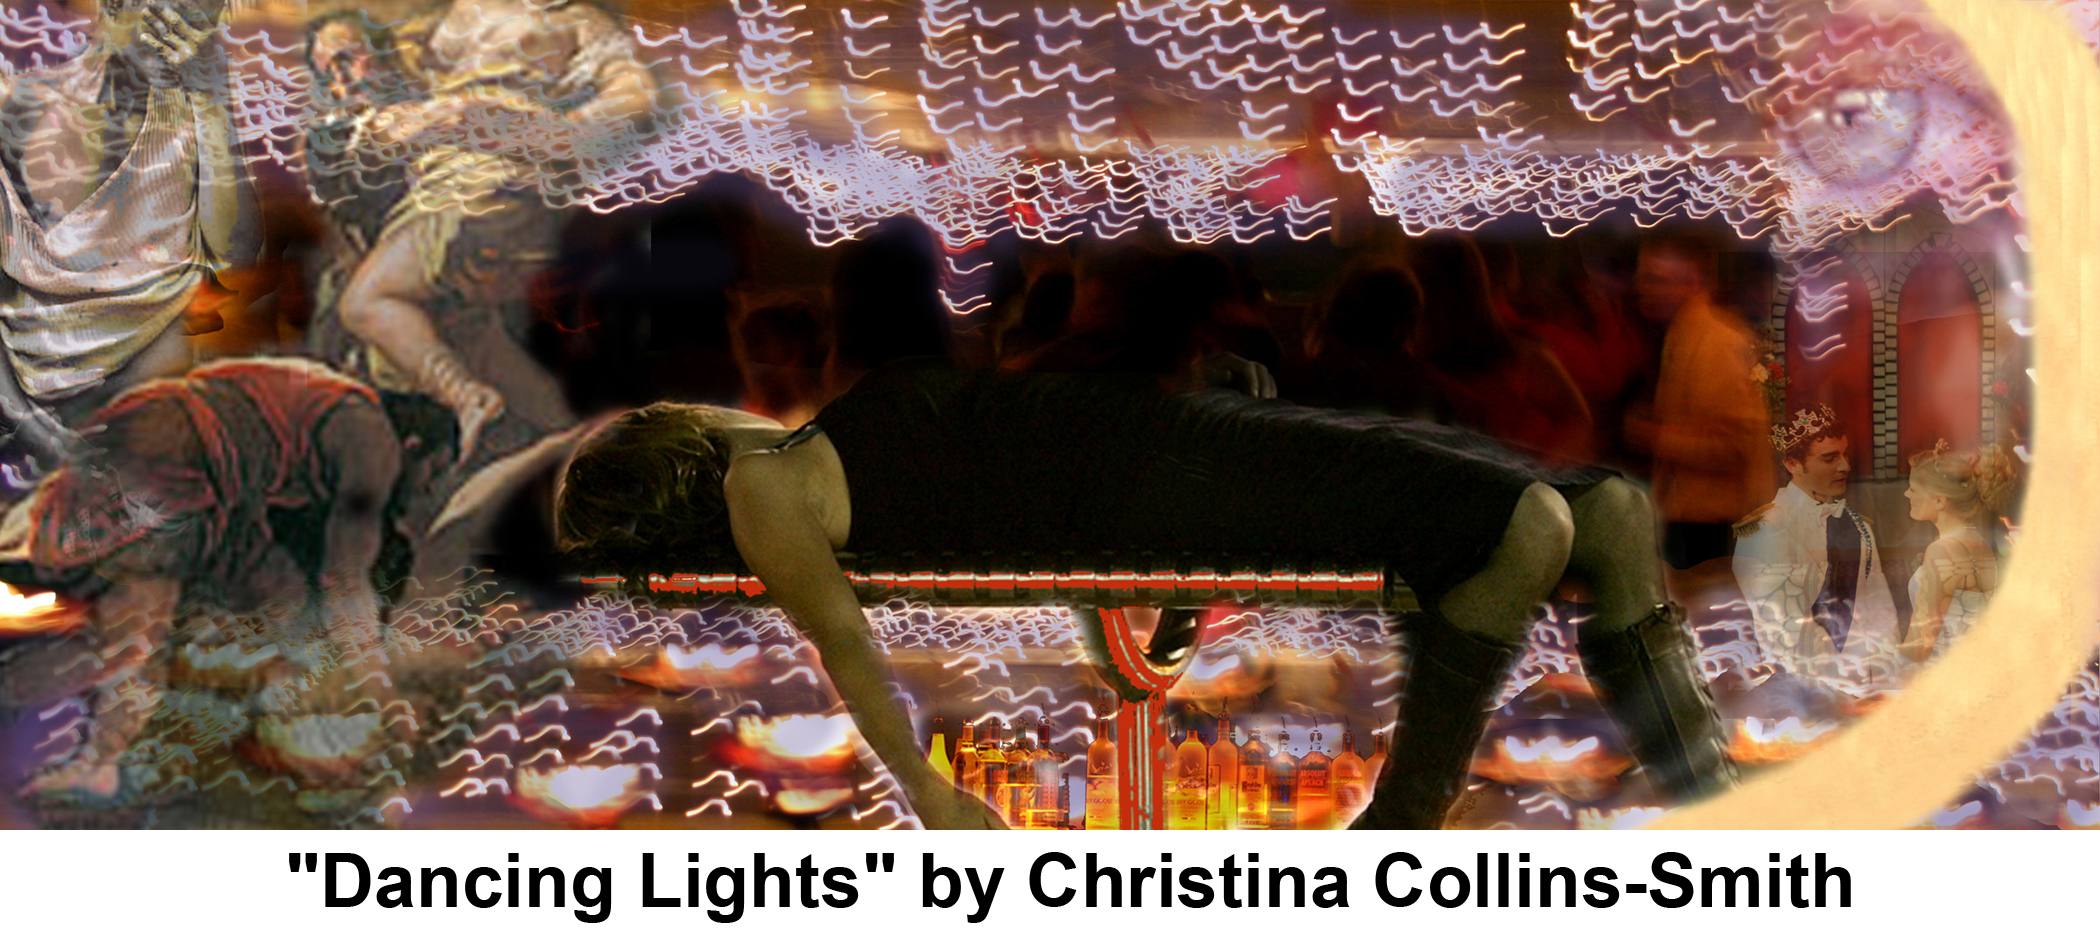 Dancing Lights by Christina Collins-Smith